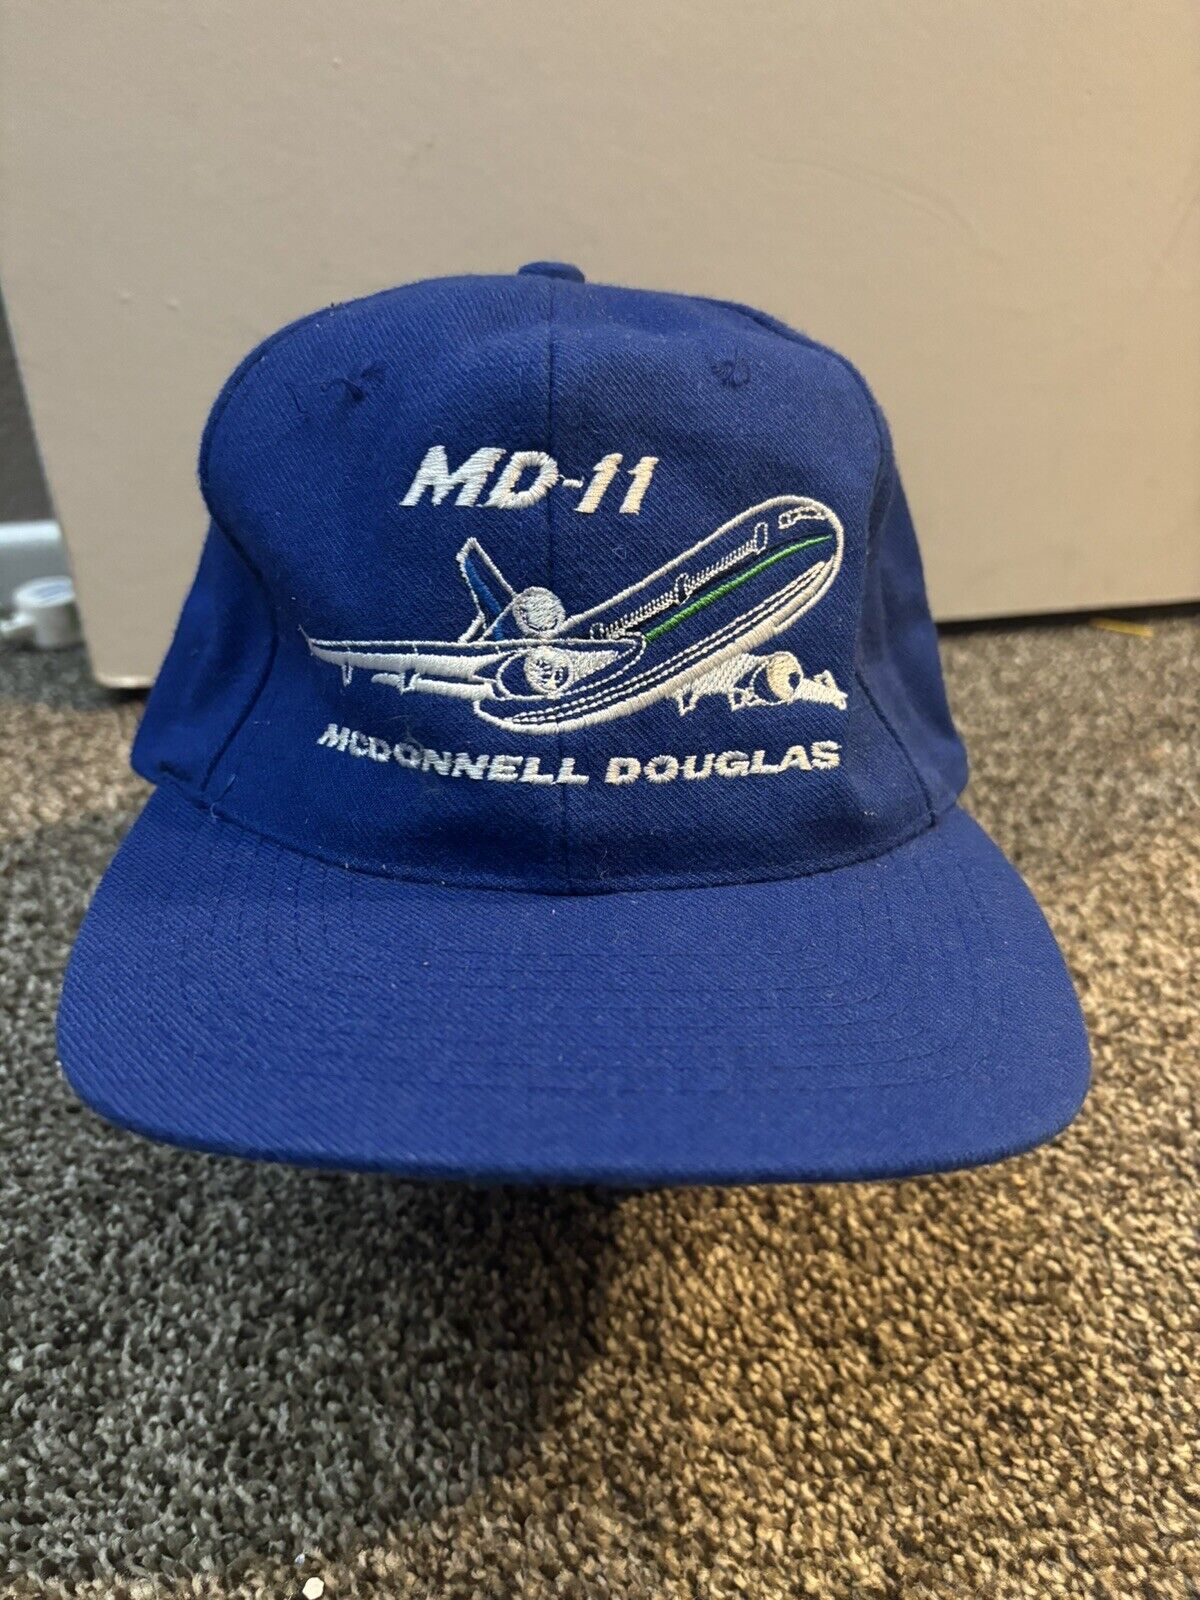 Vintage McDonnell Douglas MD—11 Airplane Hat/Cap Adjustable